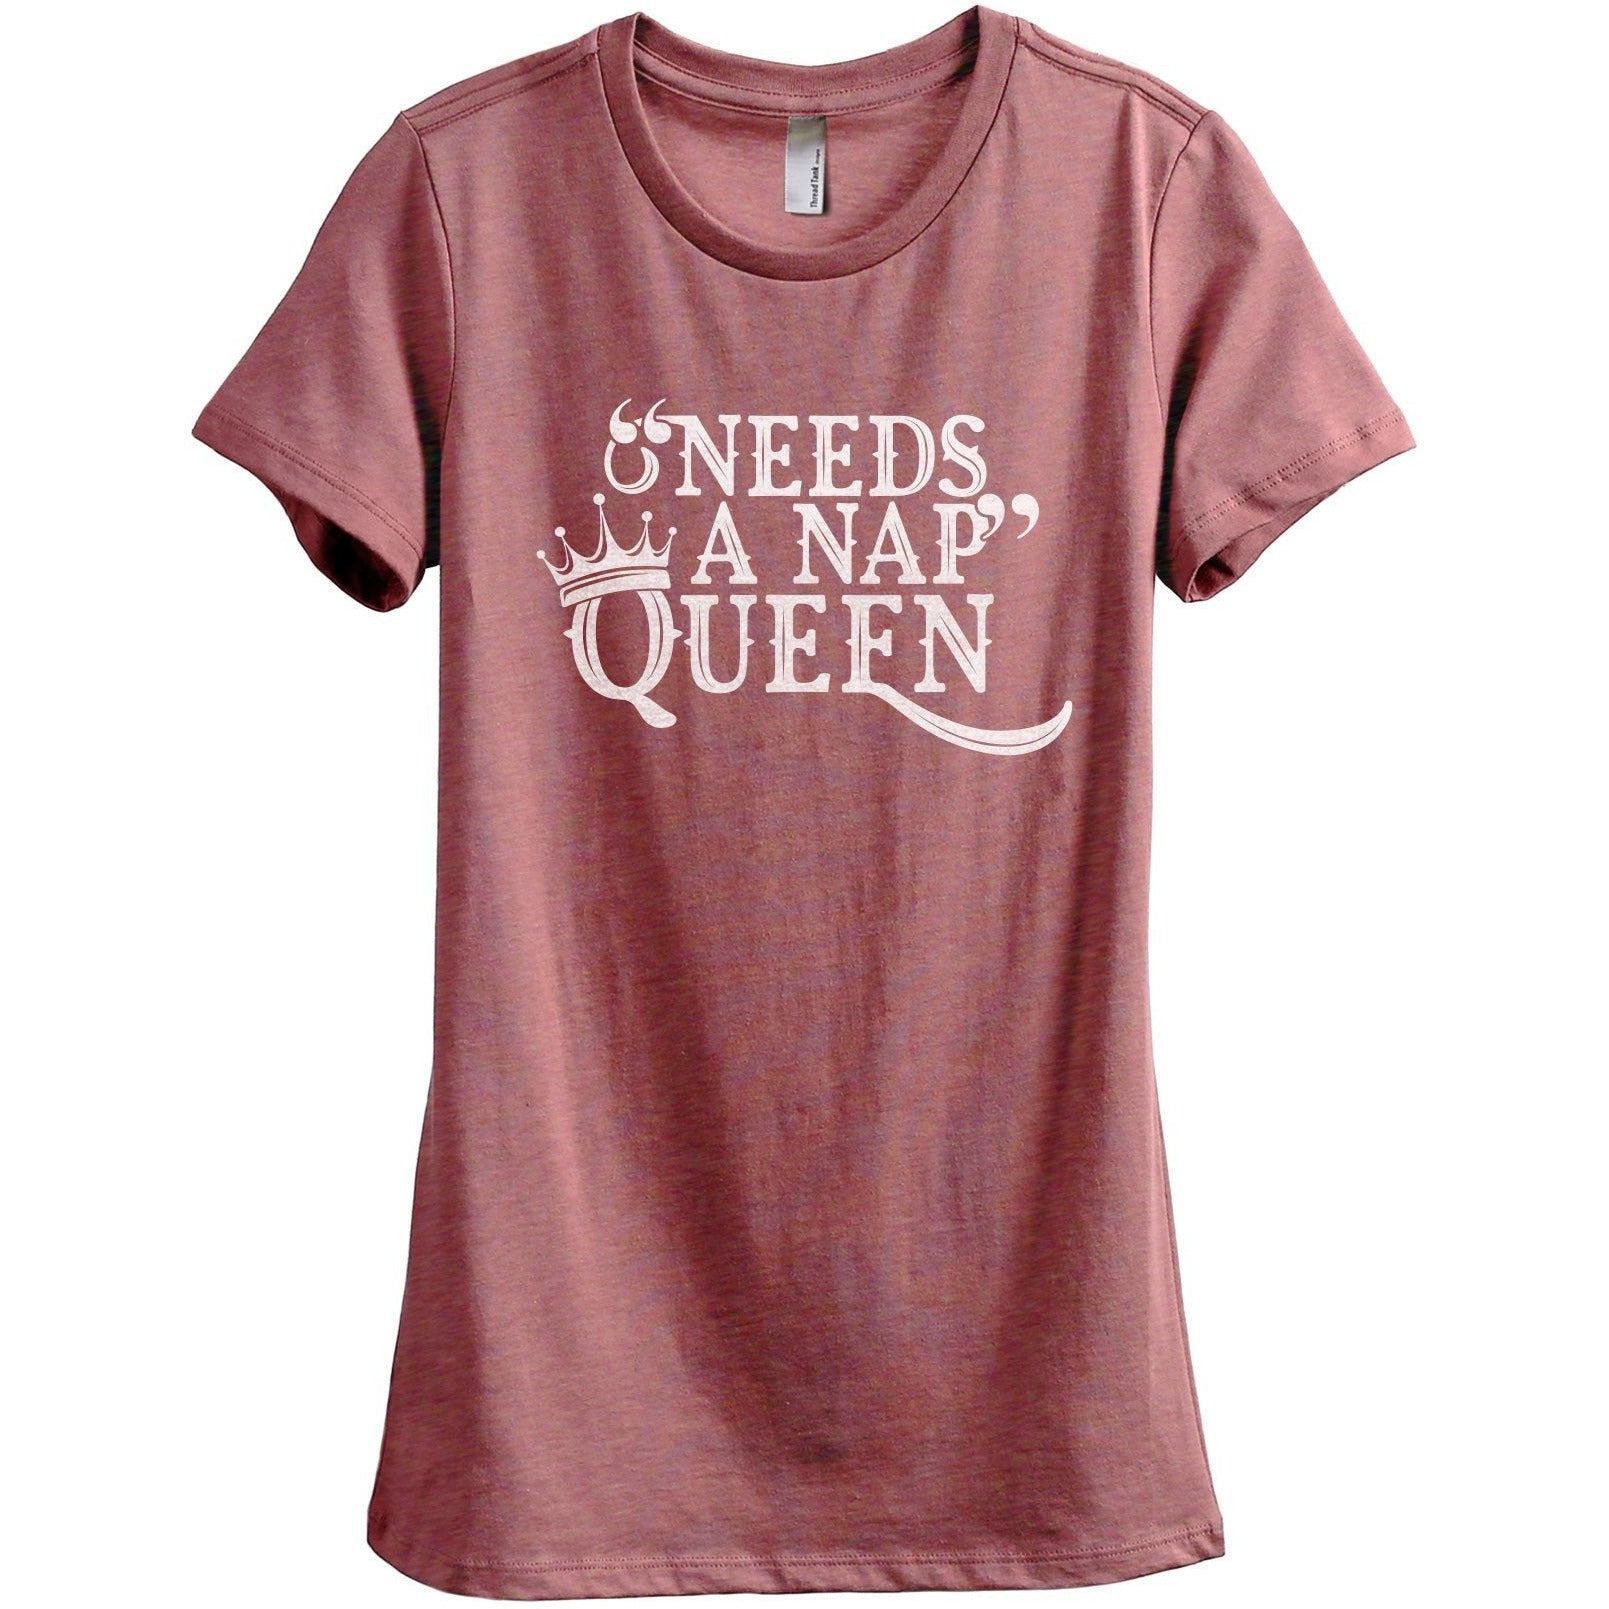 Needs A Nap Queen Women's Relaxed Crew T-Shirt Heather Rouge Shirt Image